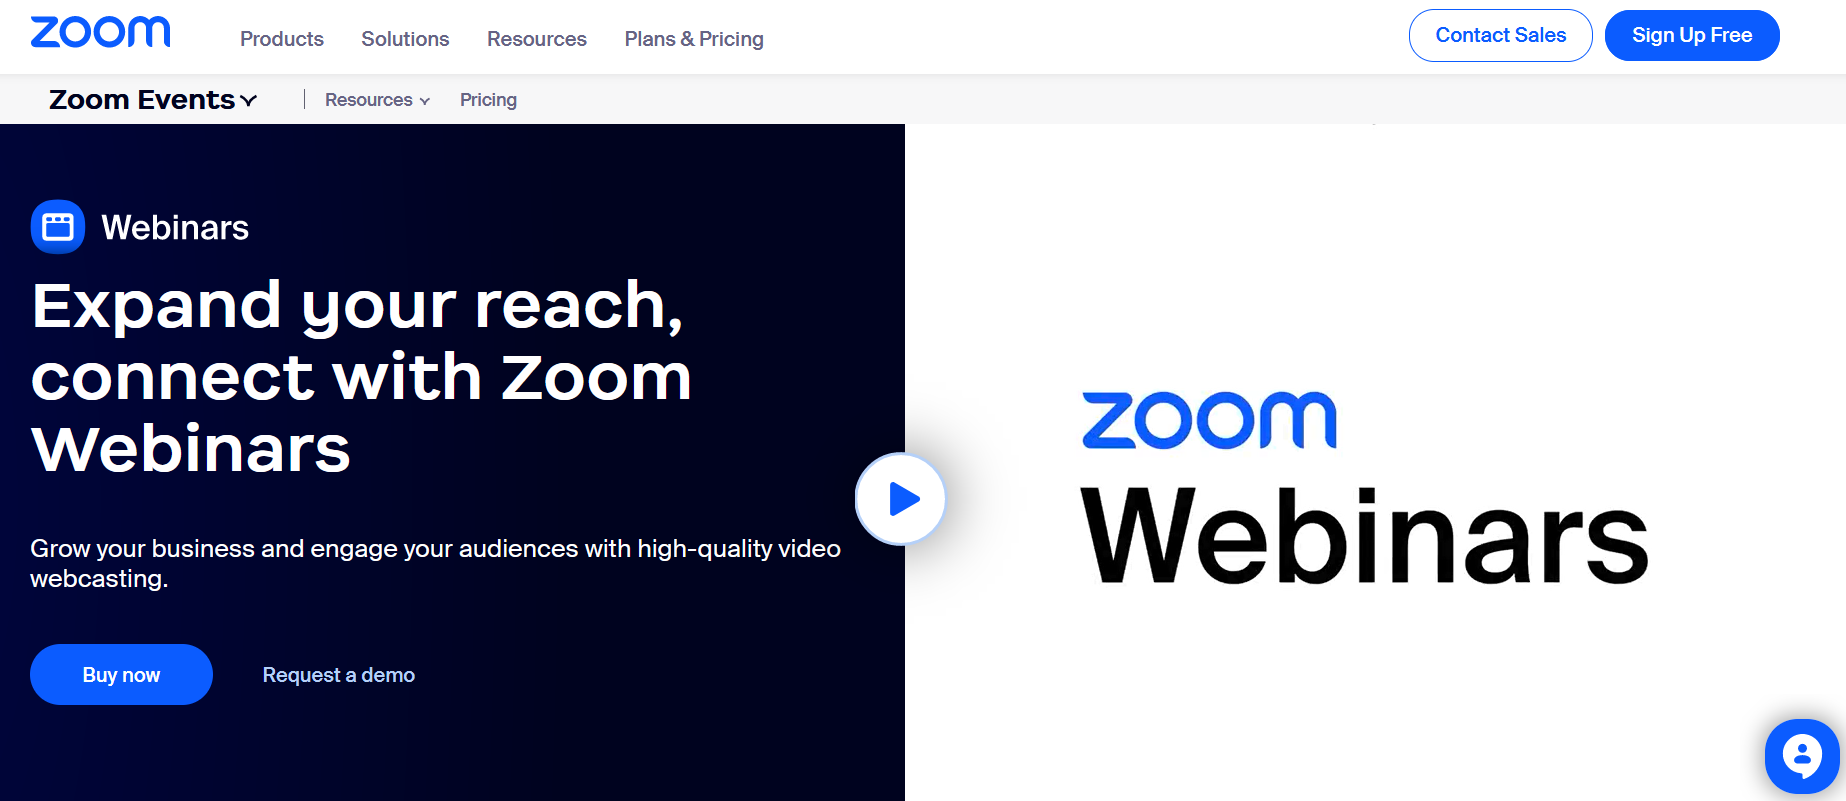 The Zoom Webinars website